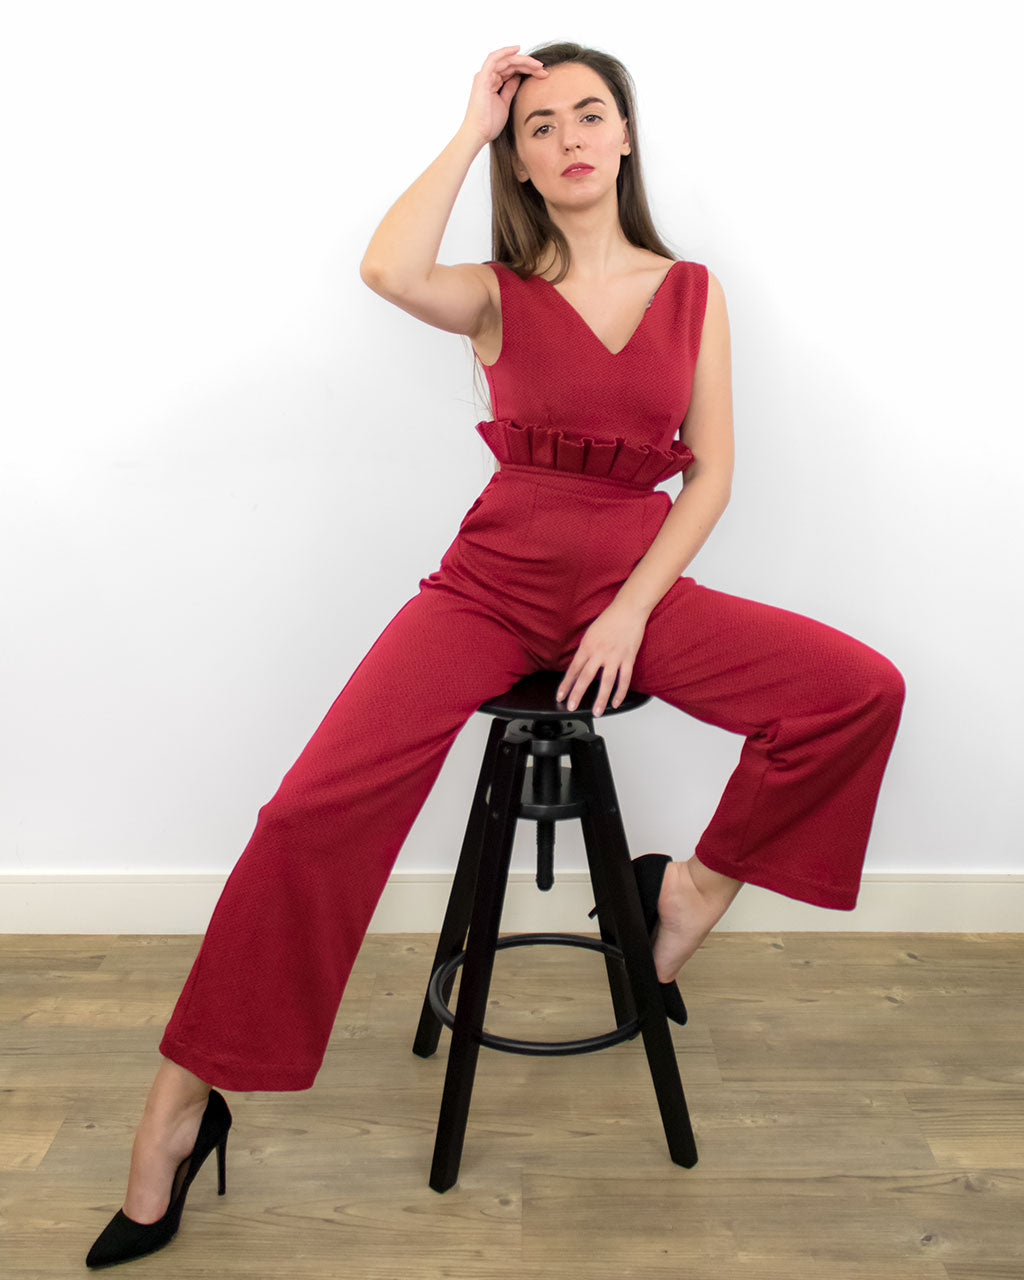 Elvira Red Organic Cotton Wide Leg Jumpsuit for Weddings